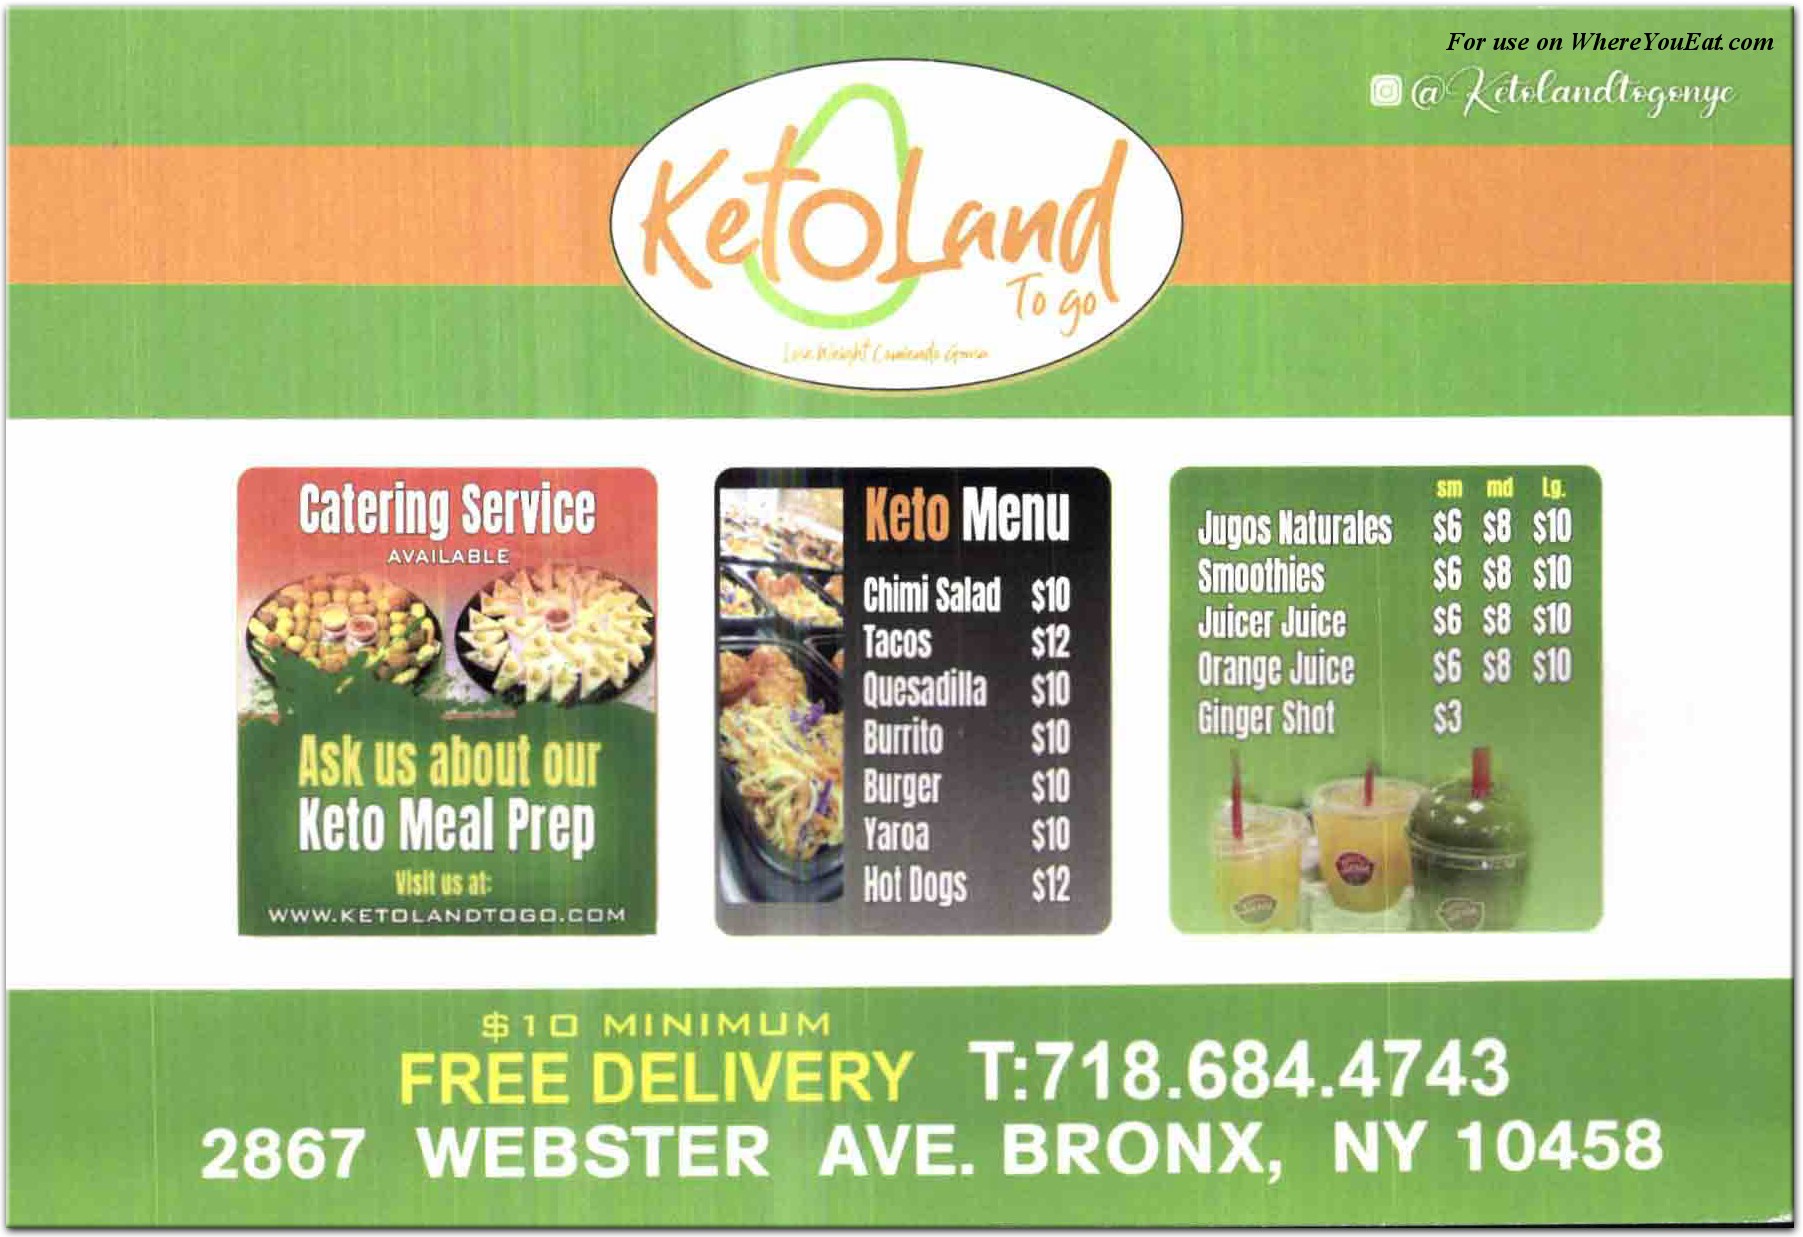 KetoLand Restaurant in The Bronx / Official Menus & Photos